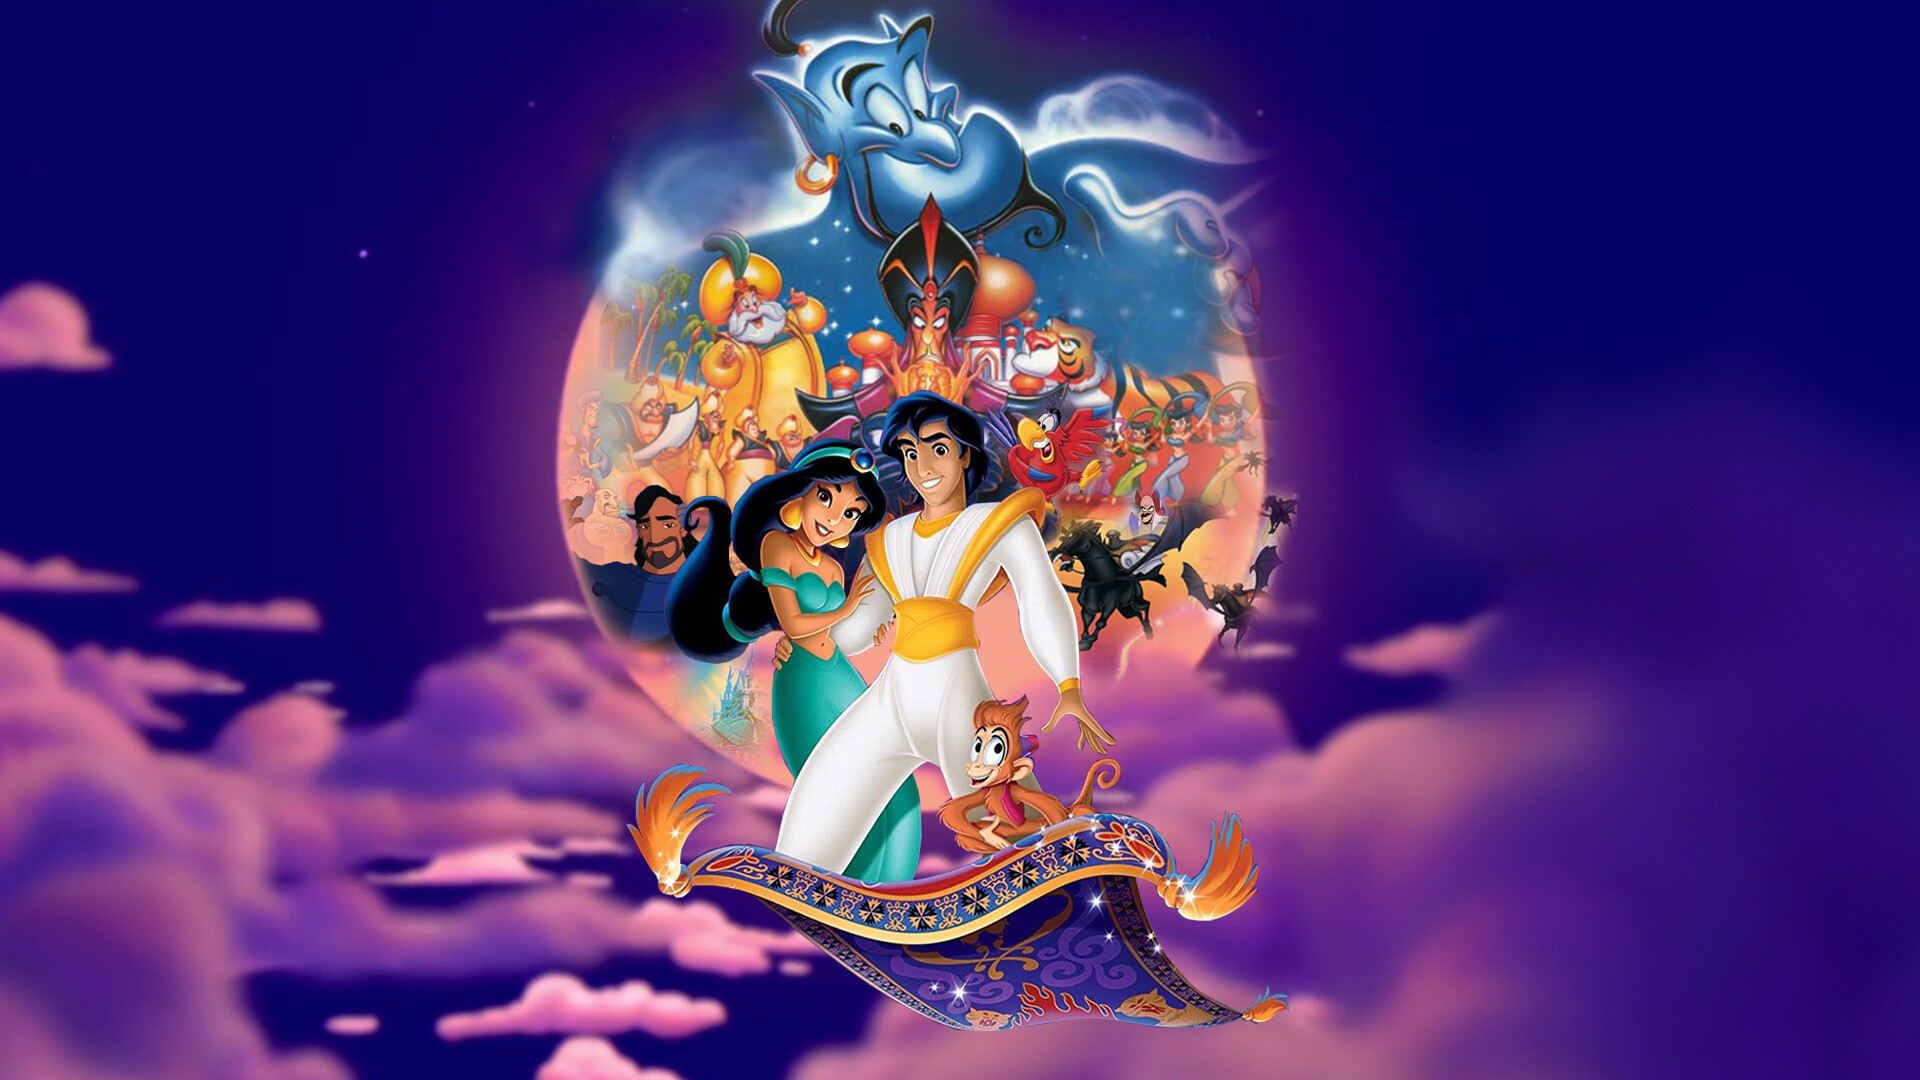 Aladdin (Cartoon): One of Disney's finest animated family films, Genie. 1920x1080 Full HD Background.